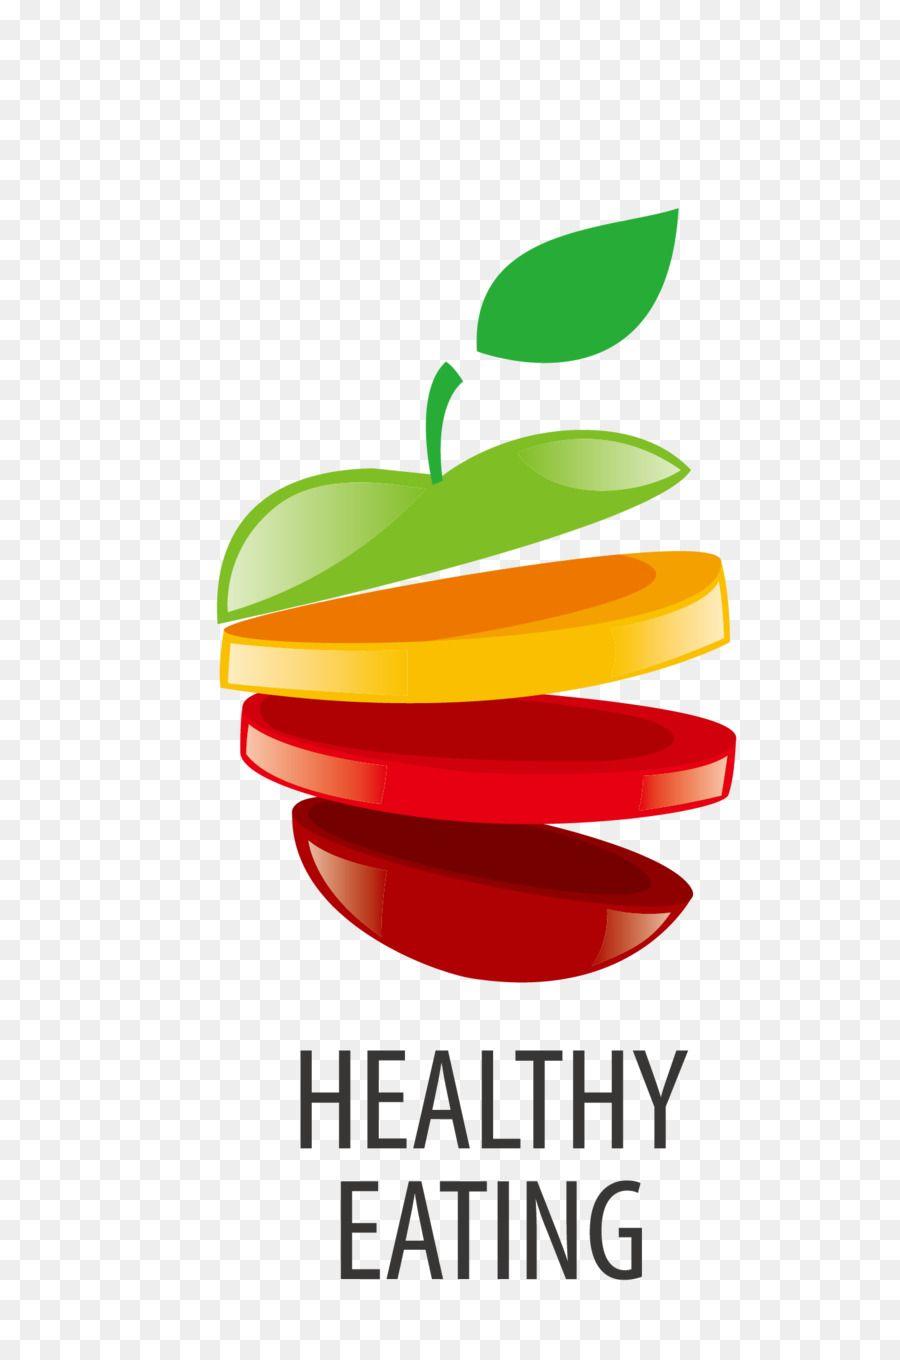 Eating Logo - Logo Healthy diet Eating Food Apple png download